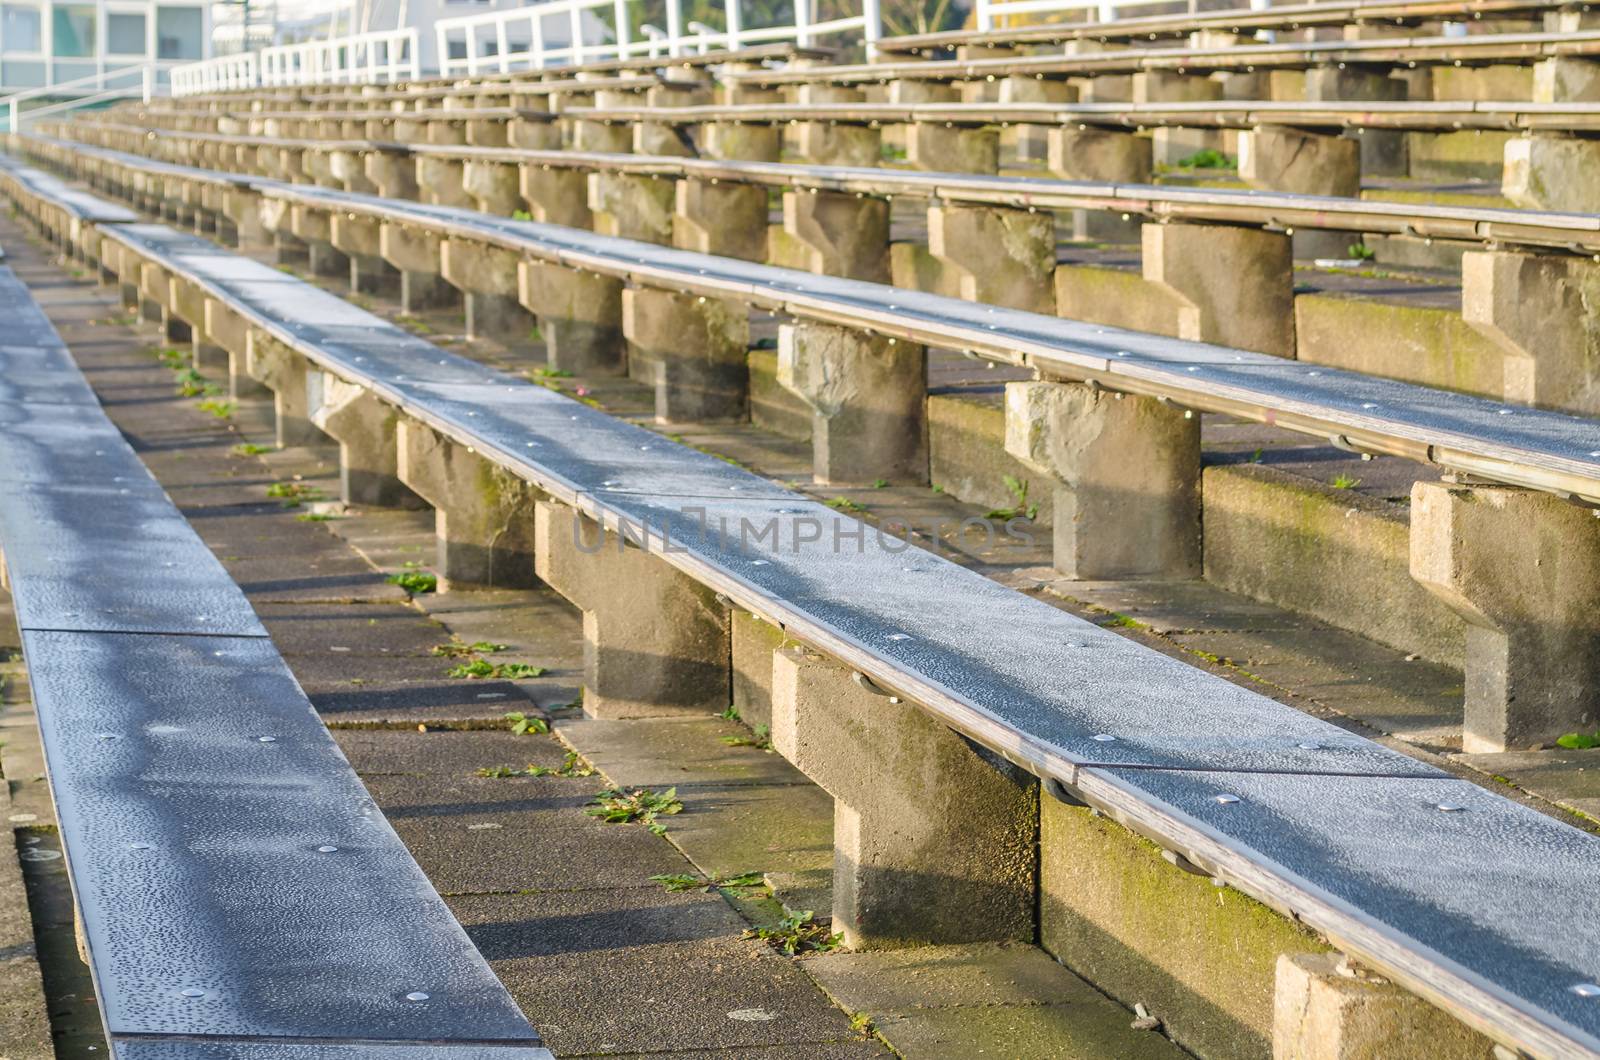 Benches, bleachers, stadium by JFsPic